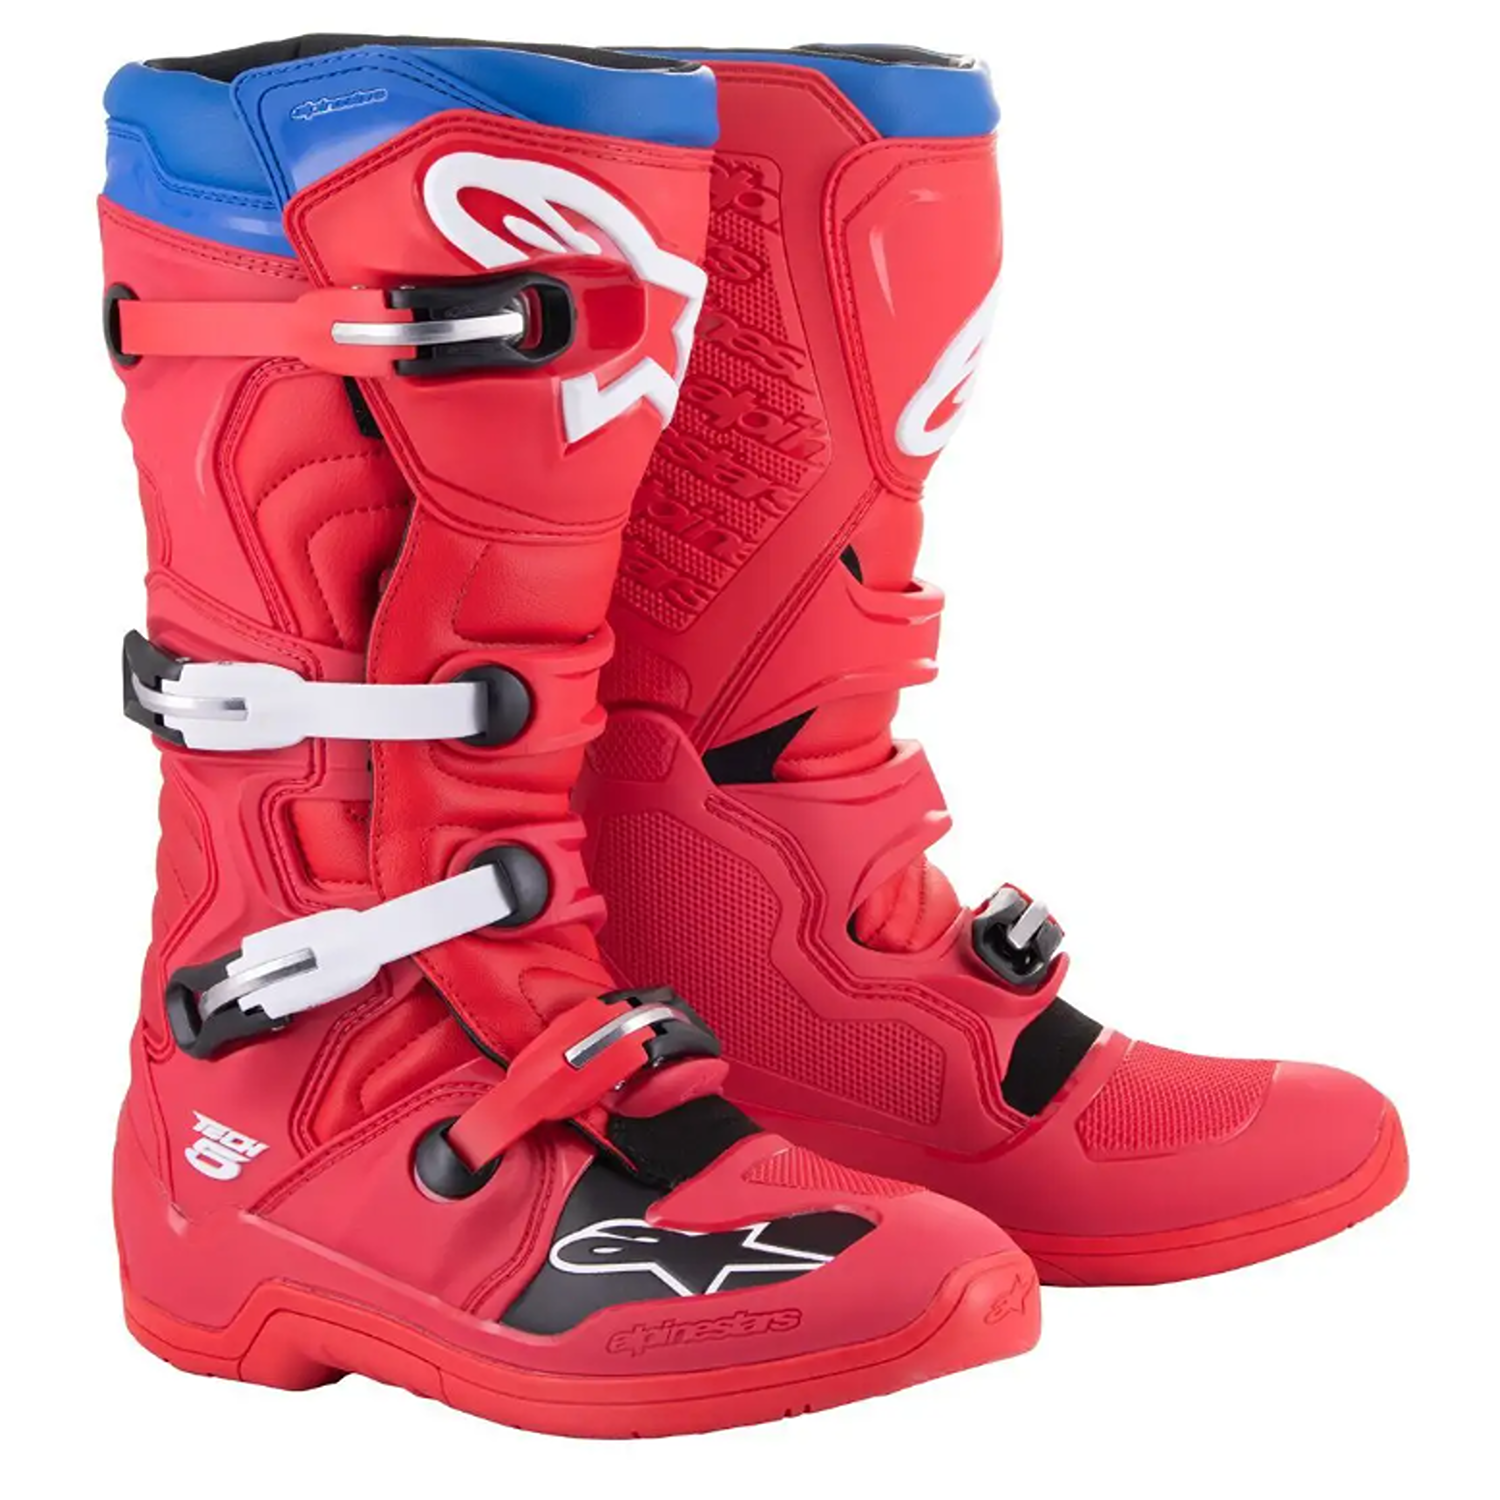 Image of Alpinestars Tech 5 Boots Bright Red Dark Red Blue Size US 7 EN